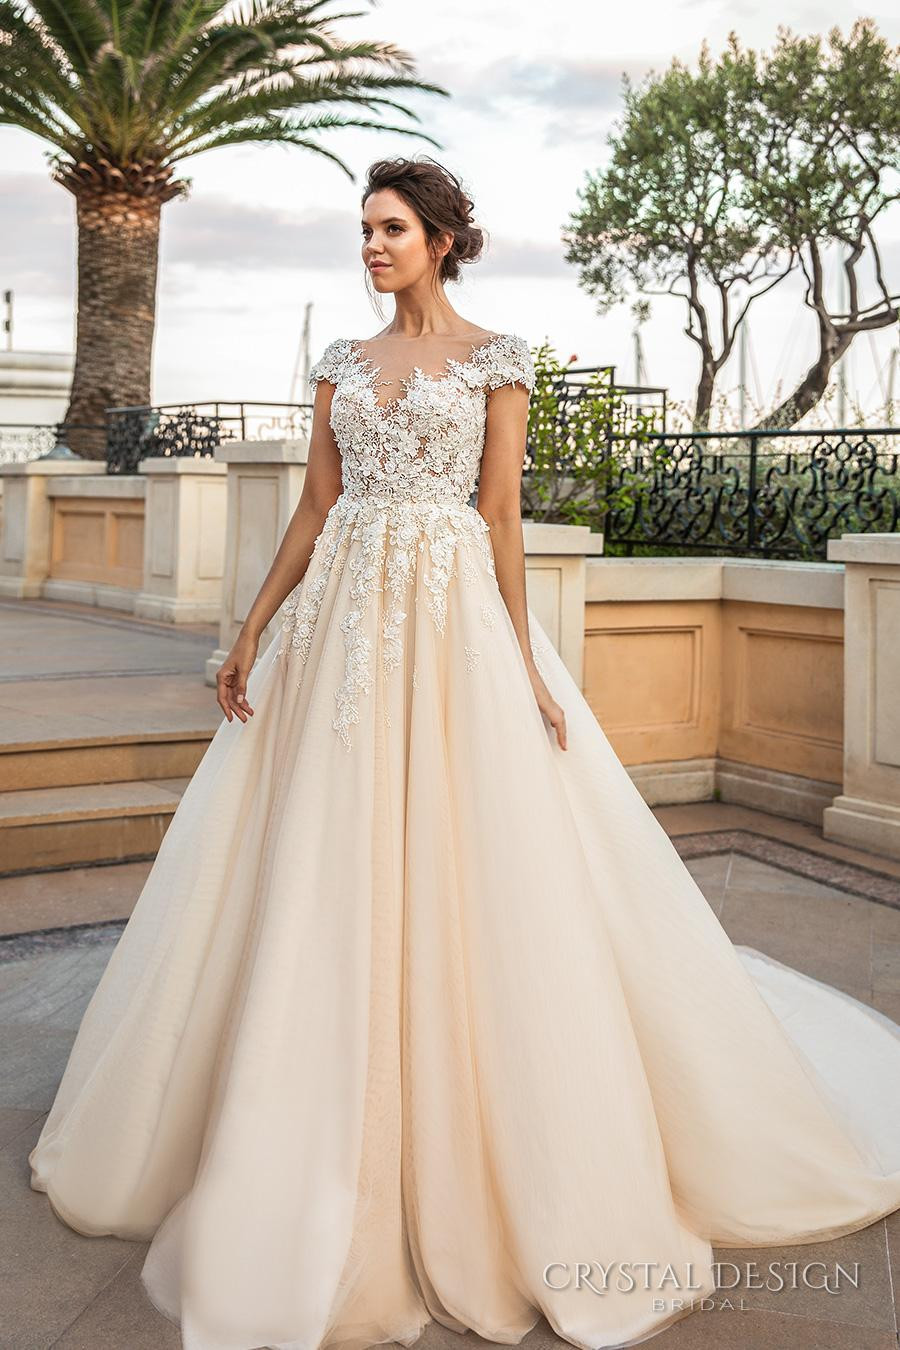 Cream Wedding Dresses
 Romantic Princess Ivory Cream Wedding Dresses 2018 Crystal